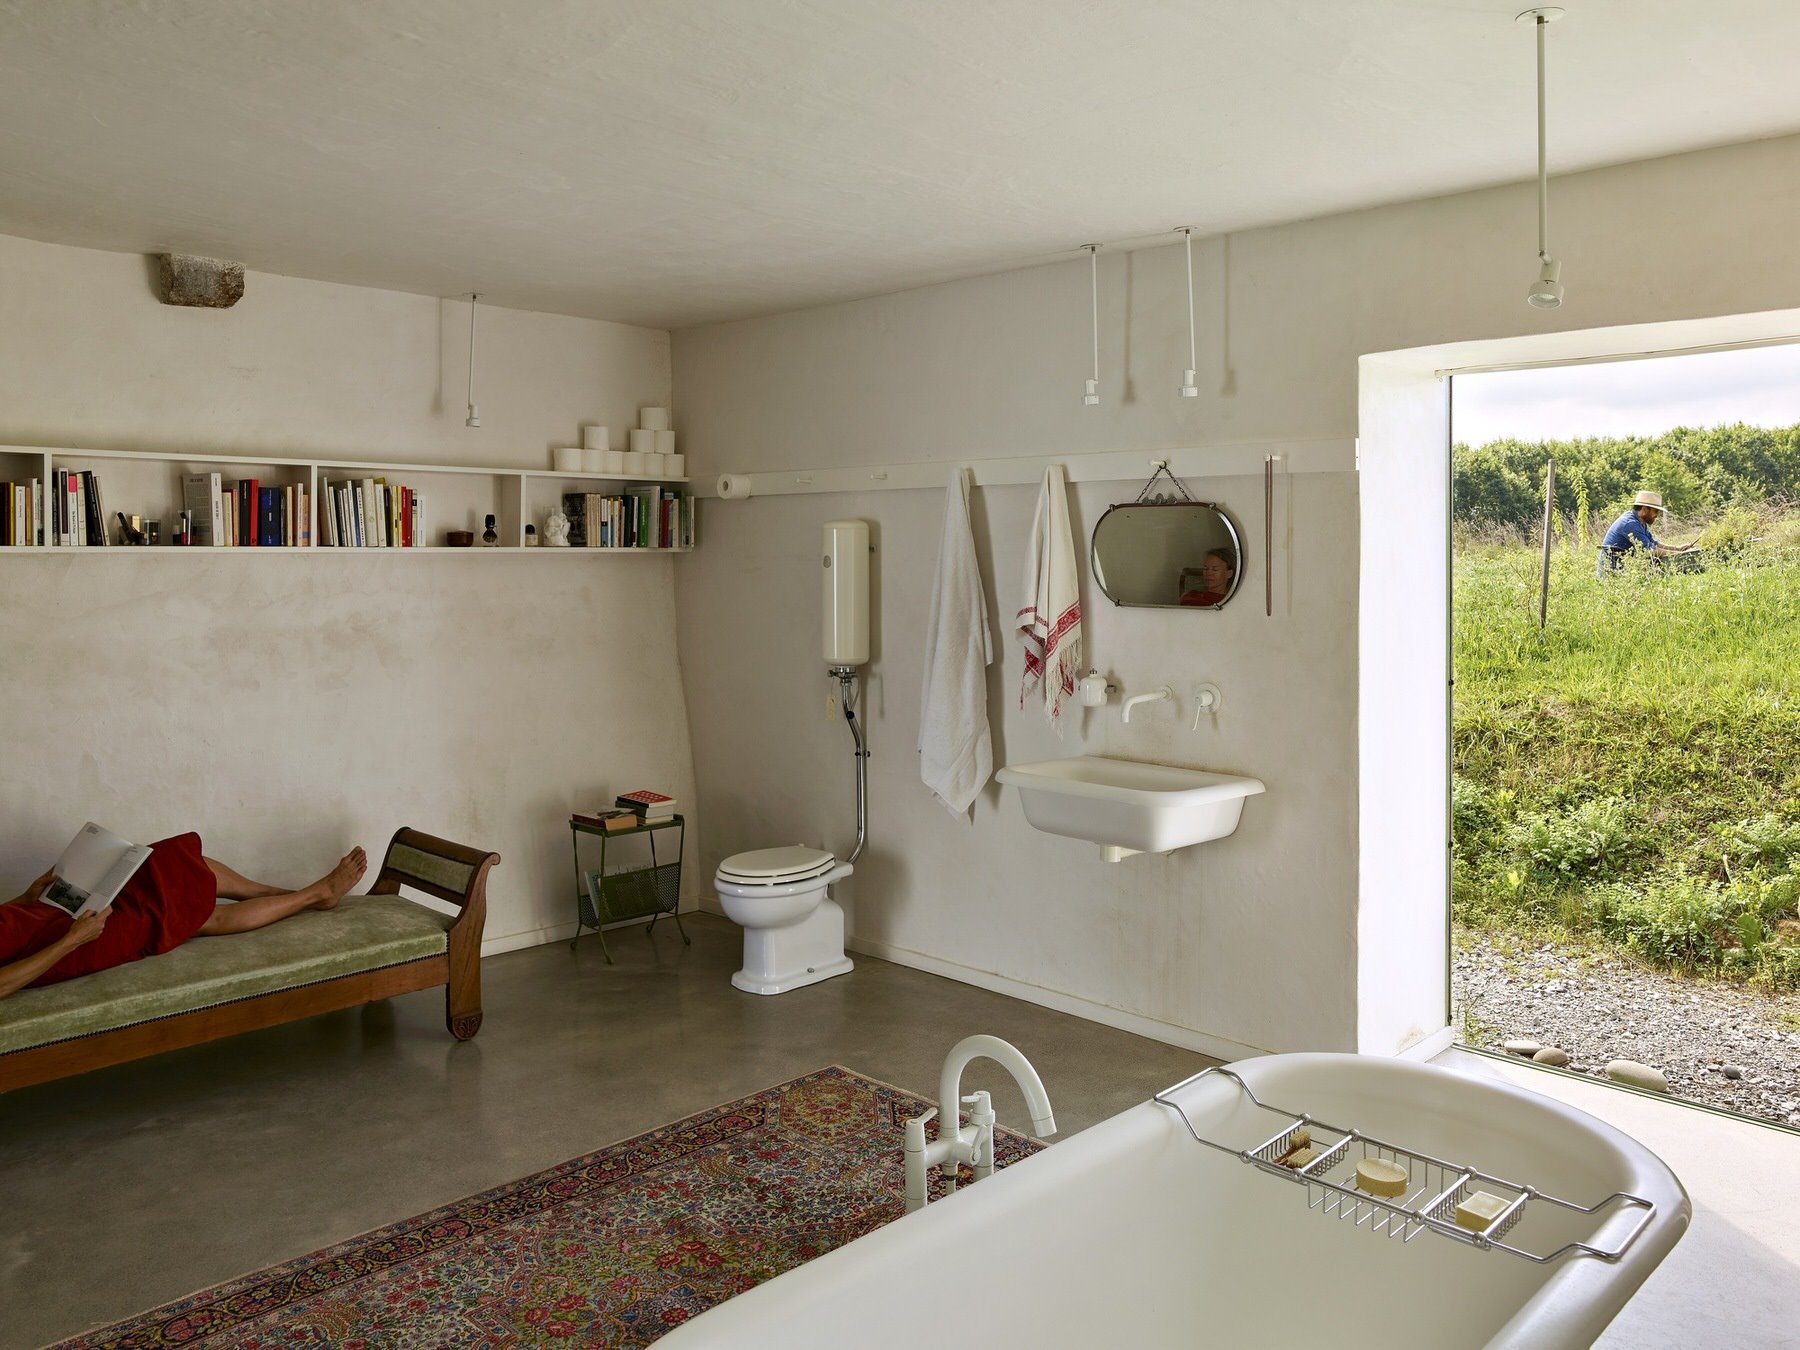 Antiguo establo abandonado convertido en casa moderna en Francia baño con bañera recuperada